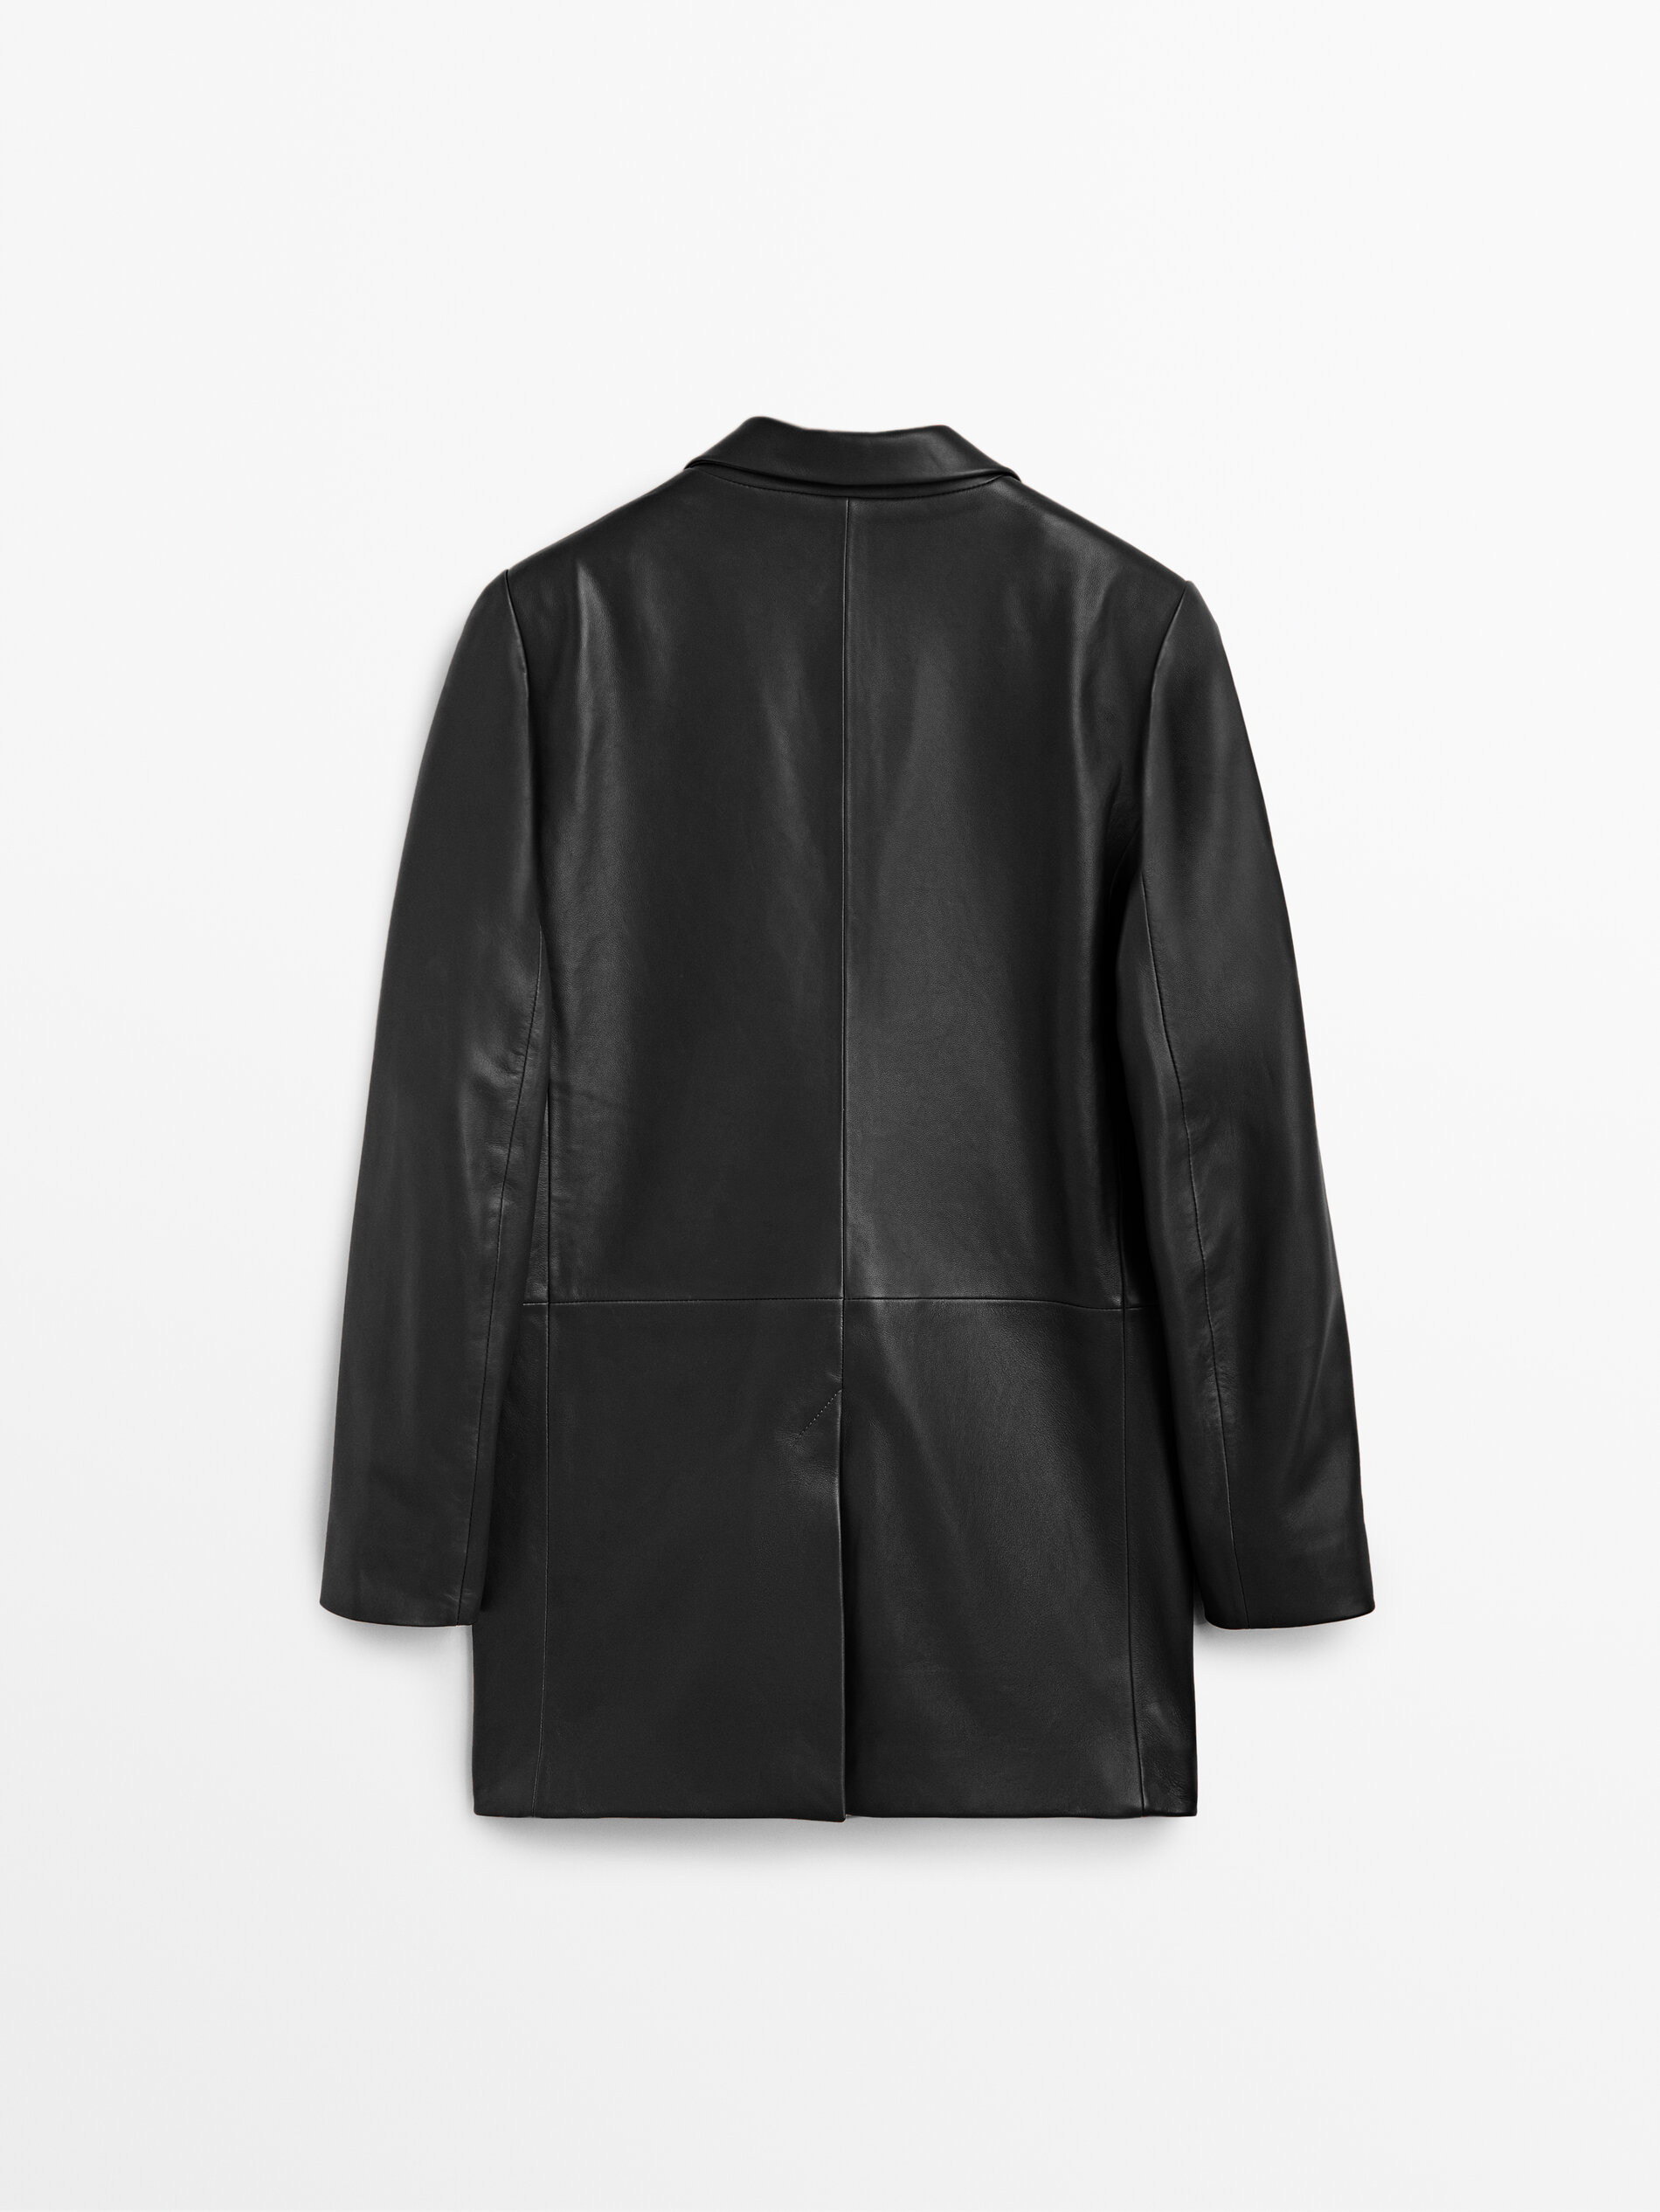 Black nappa leather blazer - Massimo Dutti Slovenia